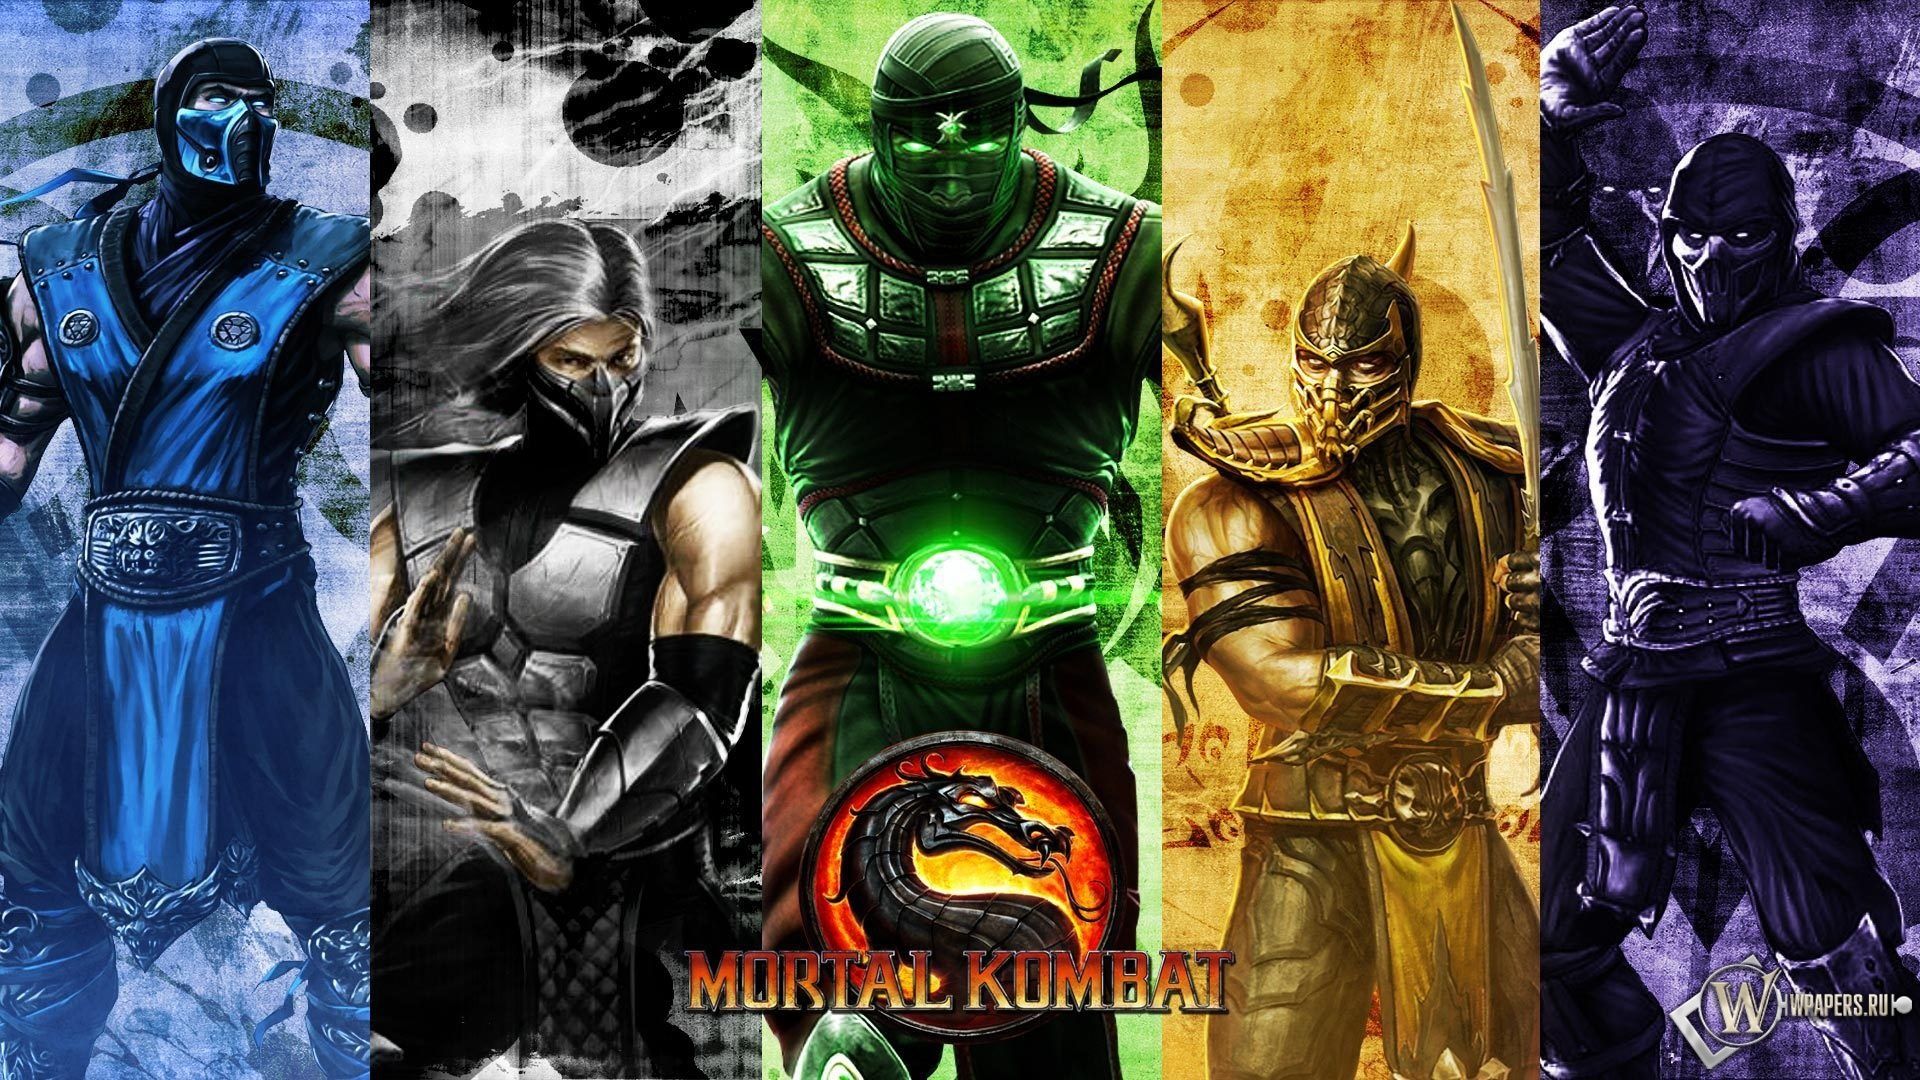 Mortal kombat 9 ppsspp game download